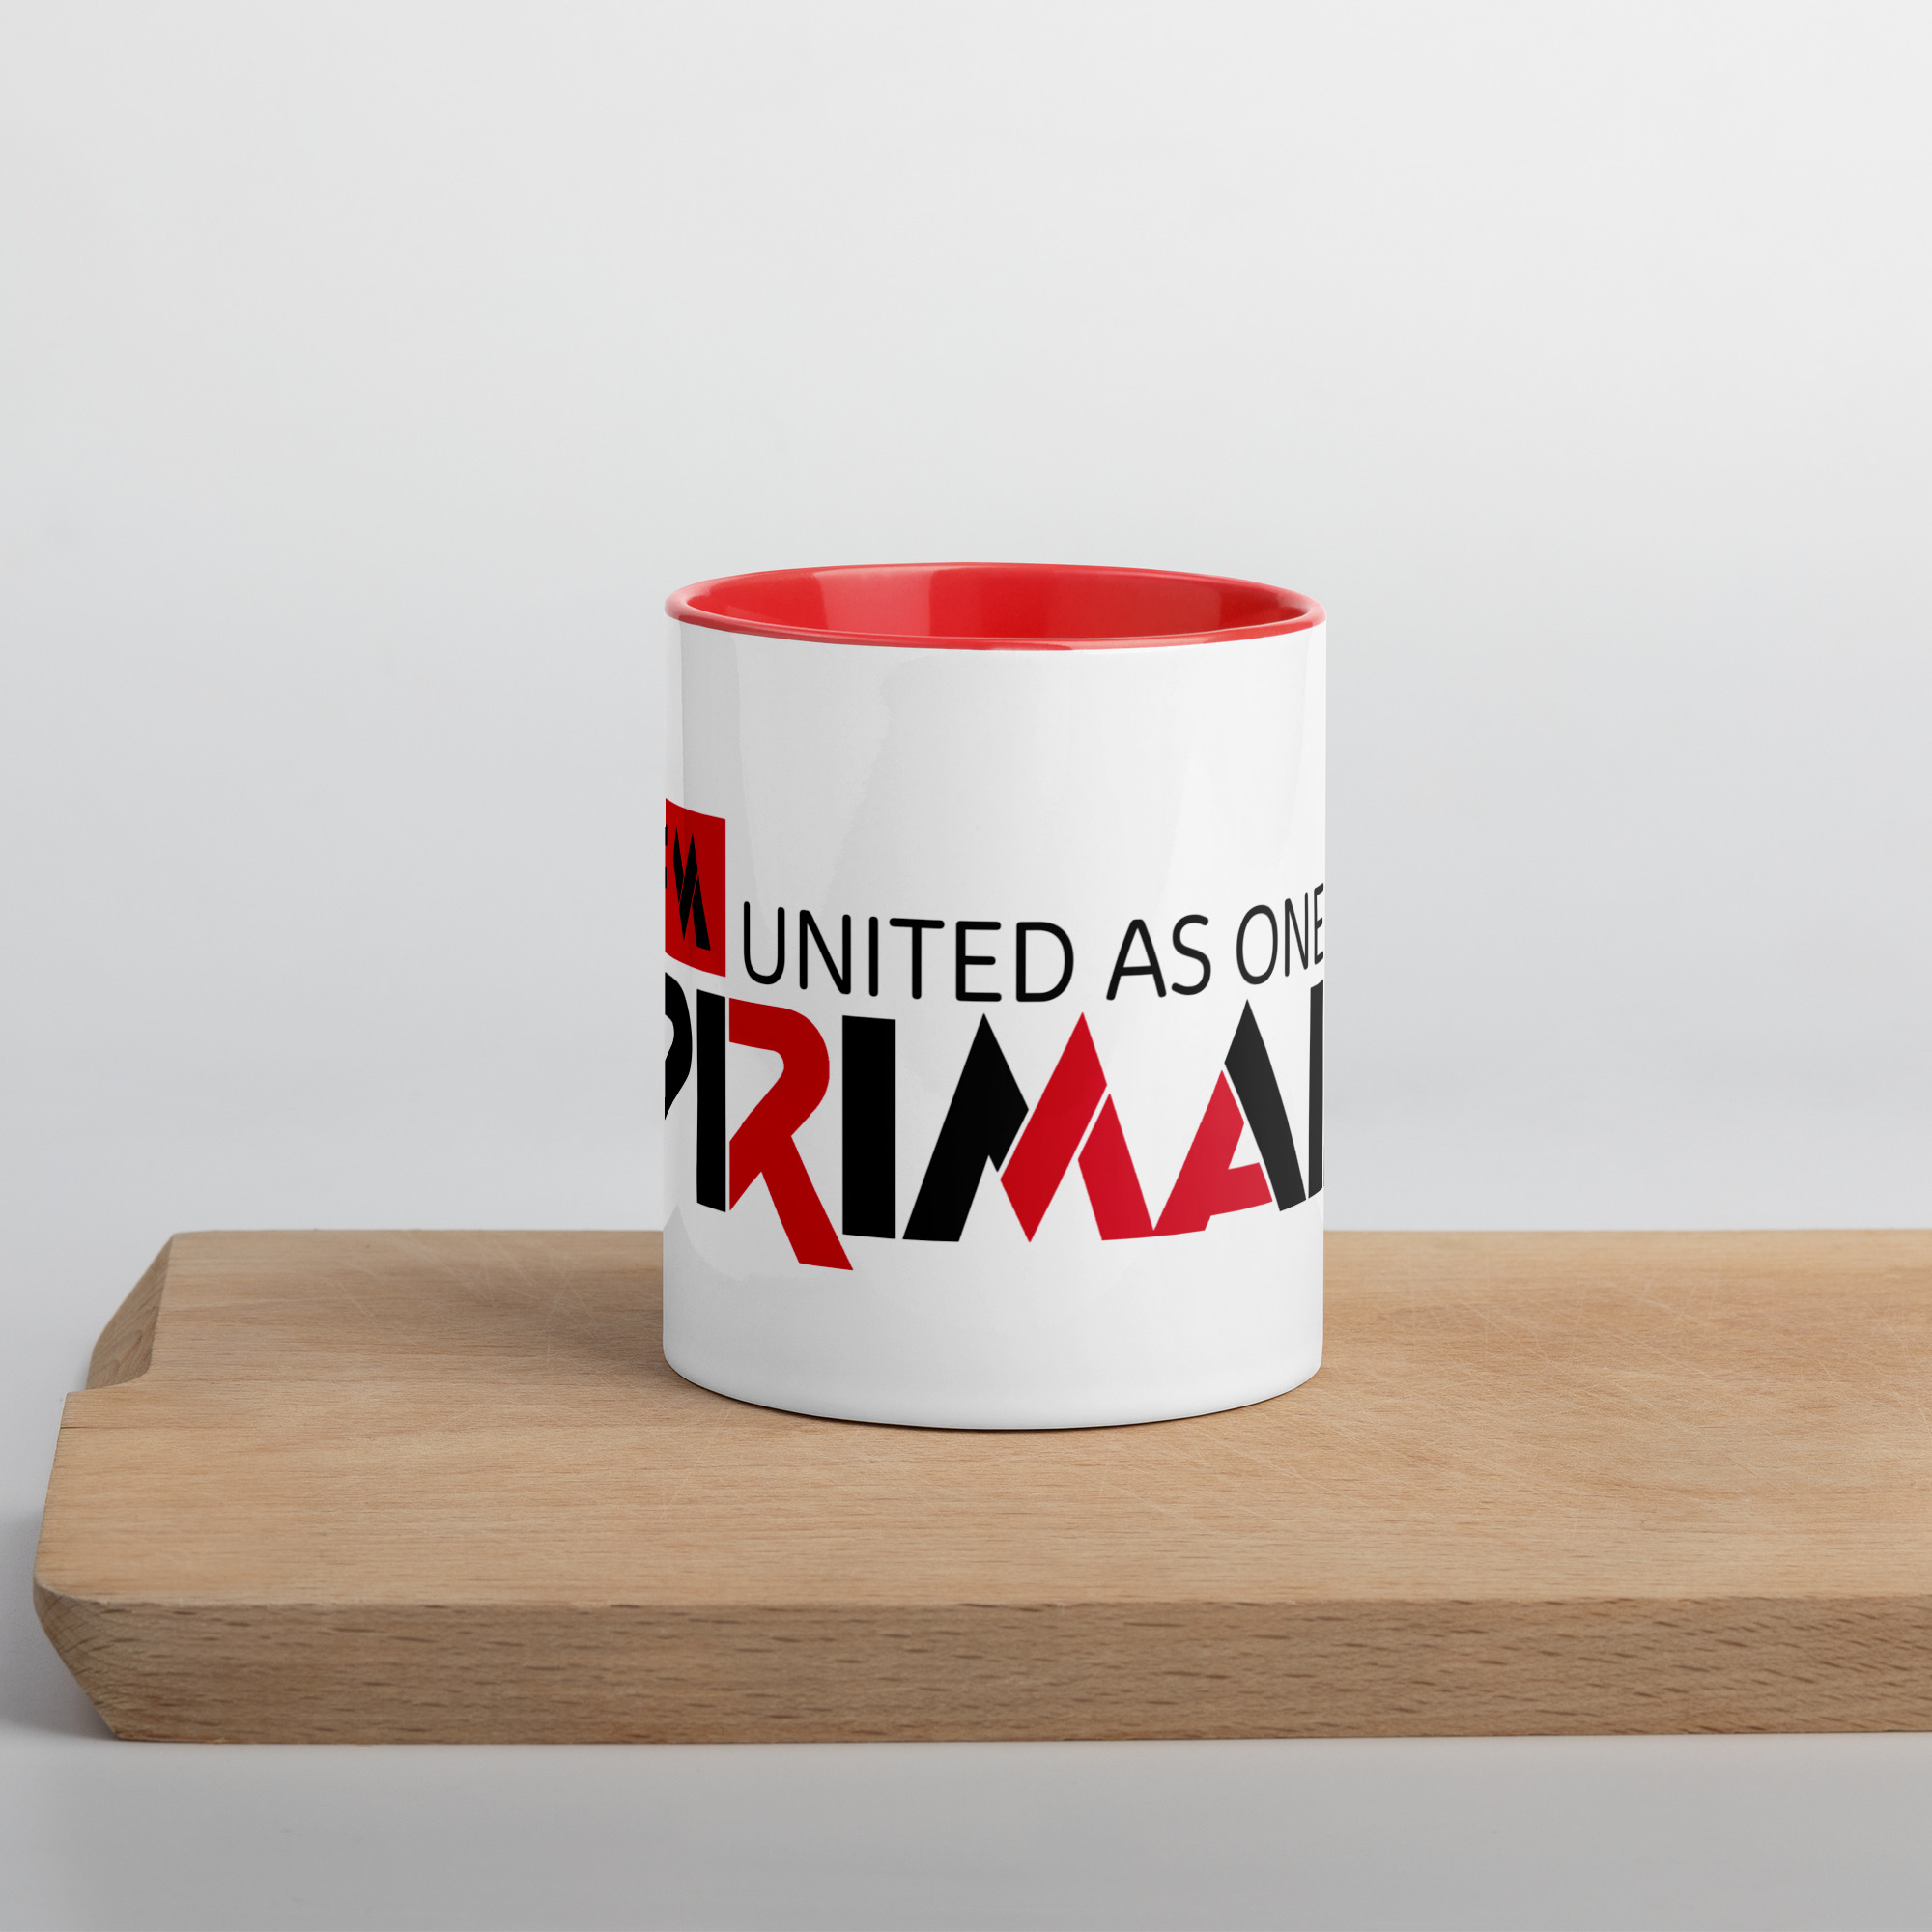 white-ceramic-mug-with-color-inside-red-11oz-front-64682777350b4.jpg